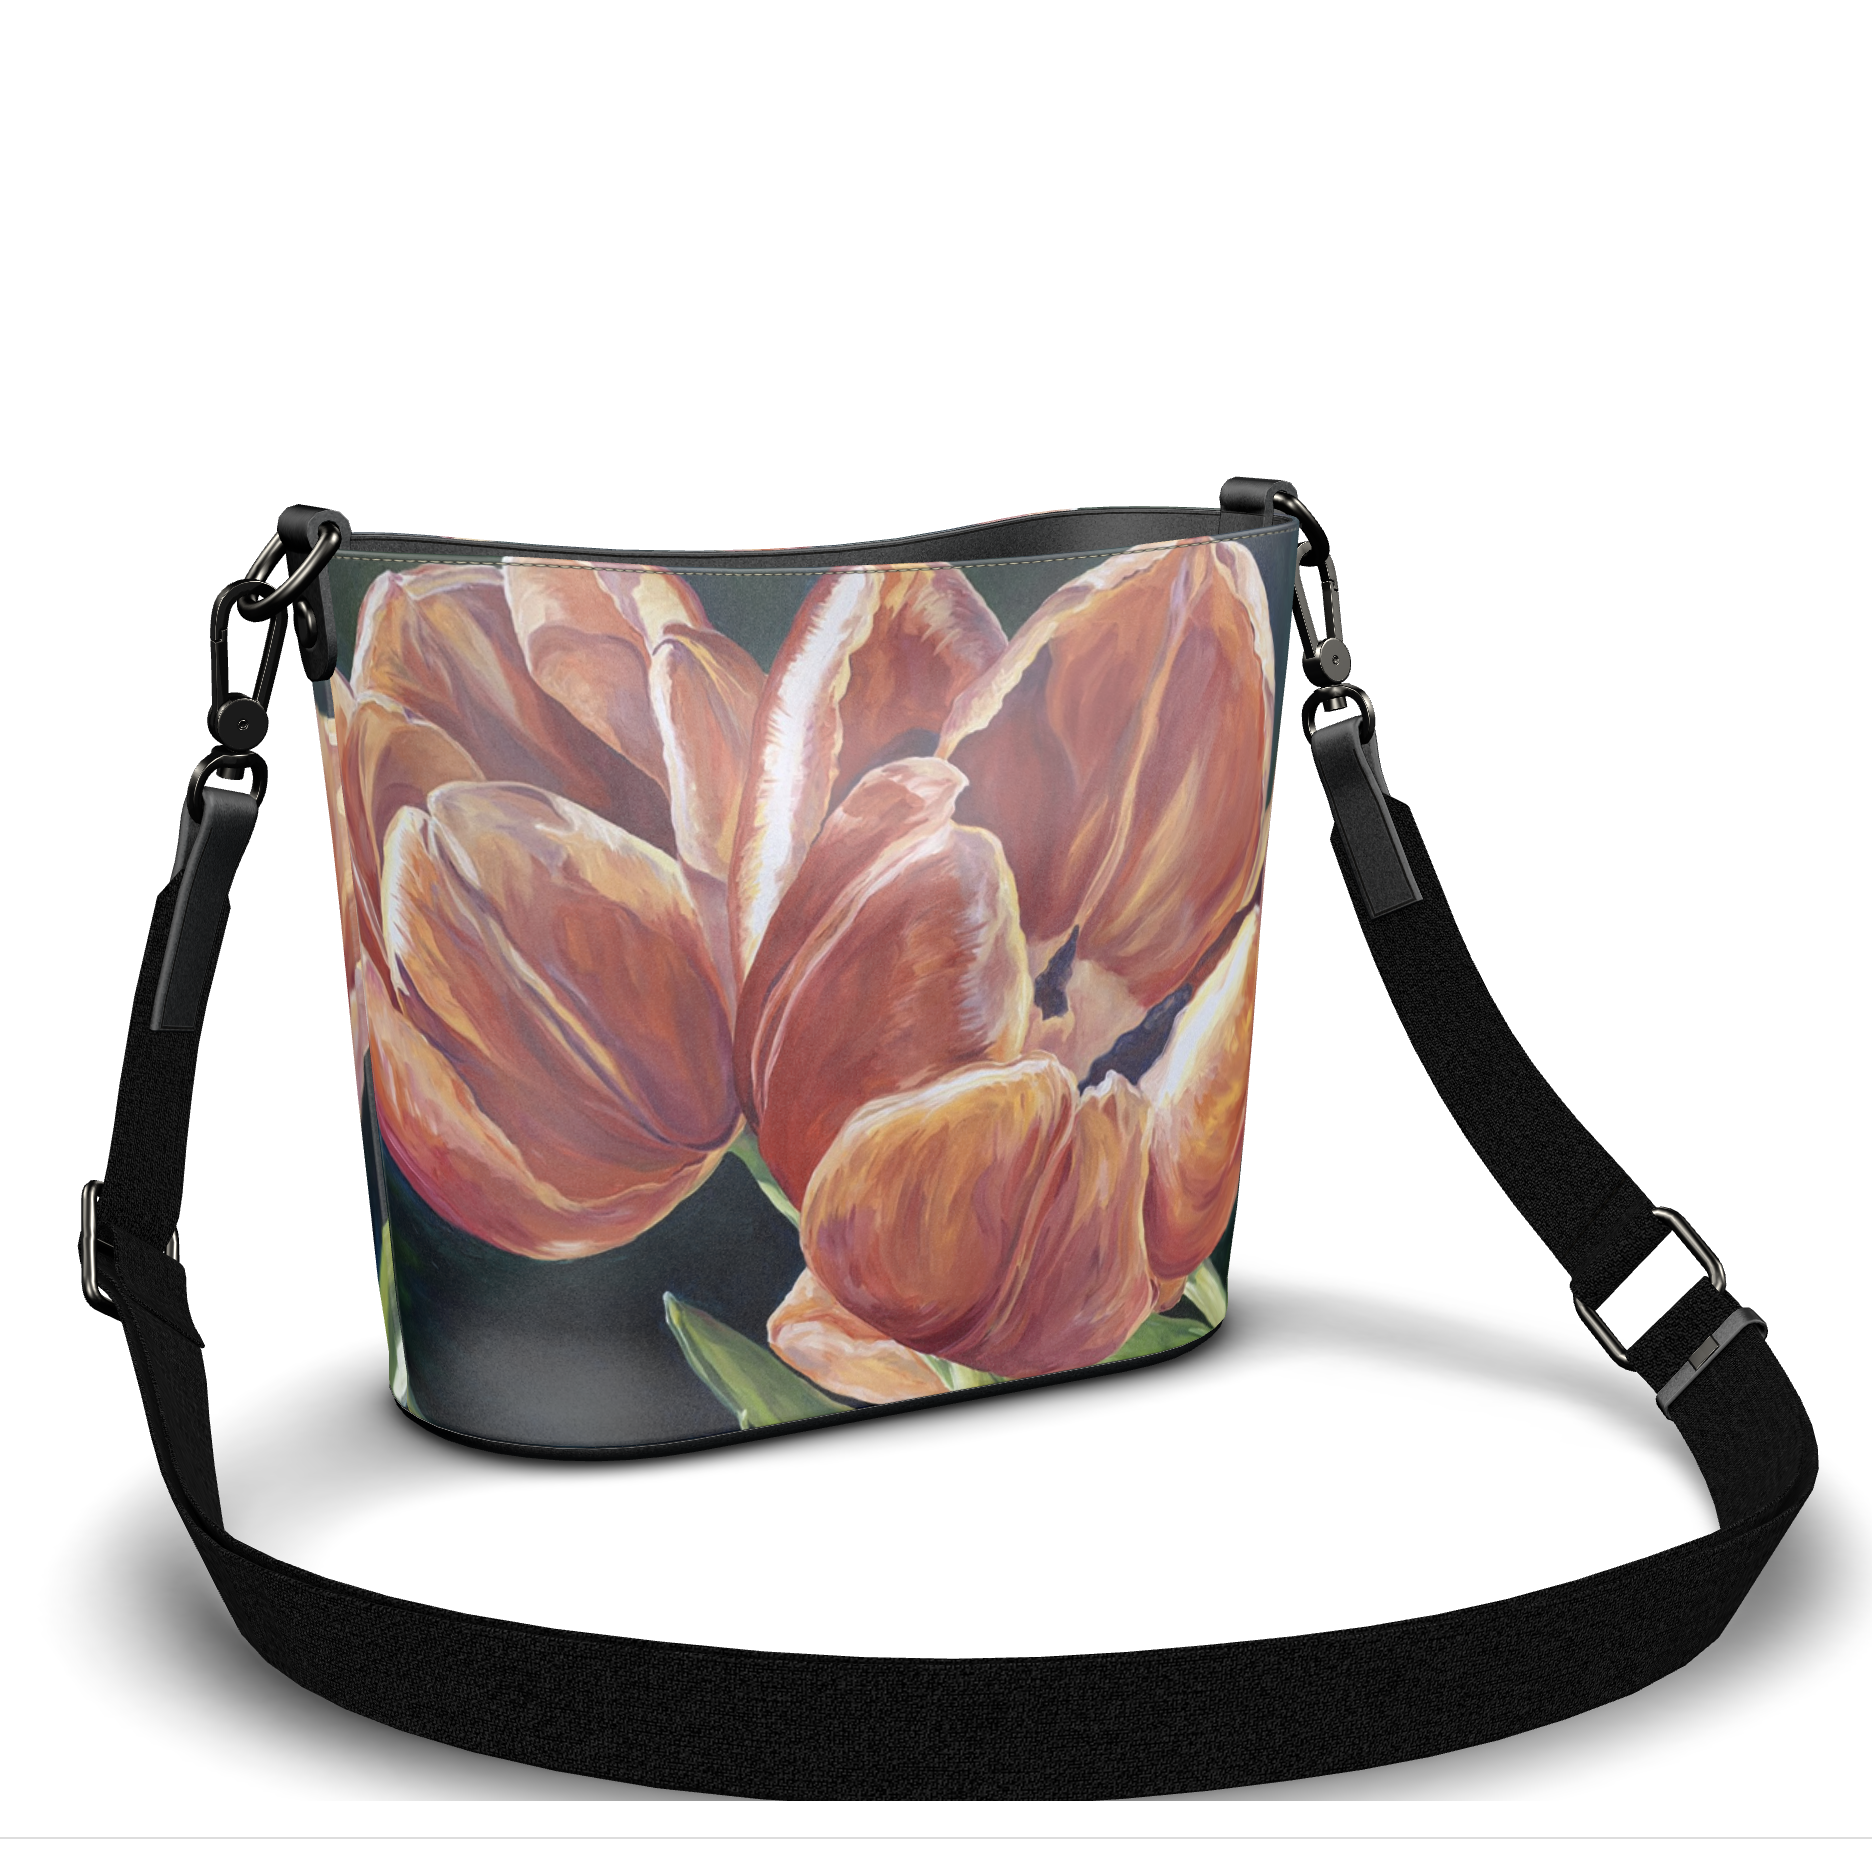 Tulip Sunset leather handbag created by Eileen Baumeister McIntyre for Garden of Silver. www.gardenofsilver.com